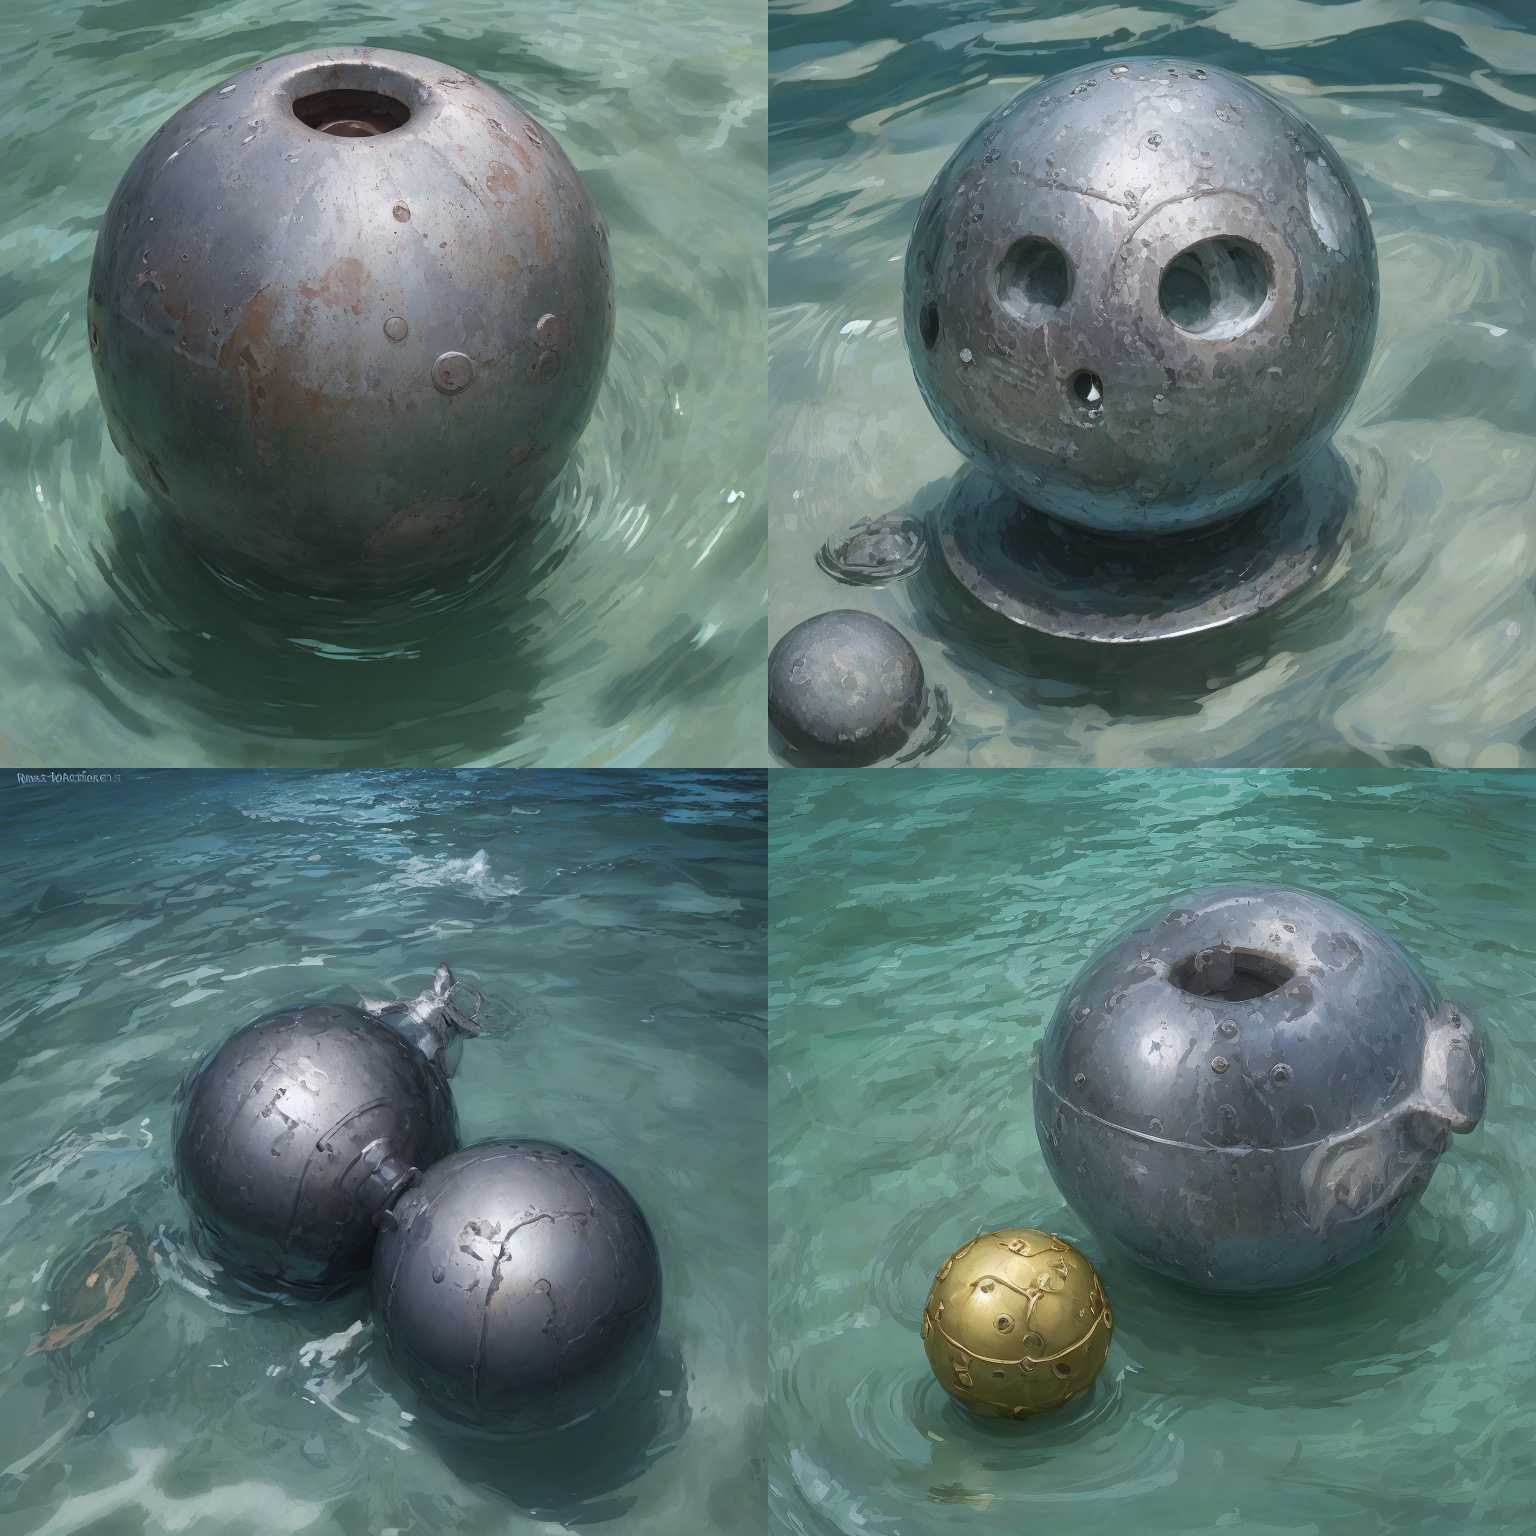 An iron ball in water